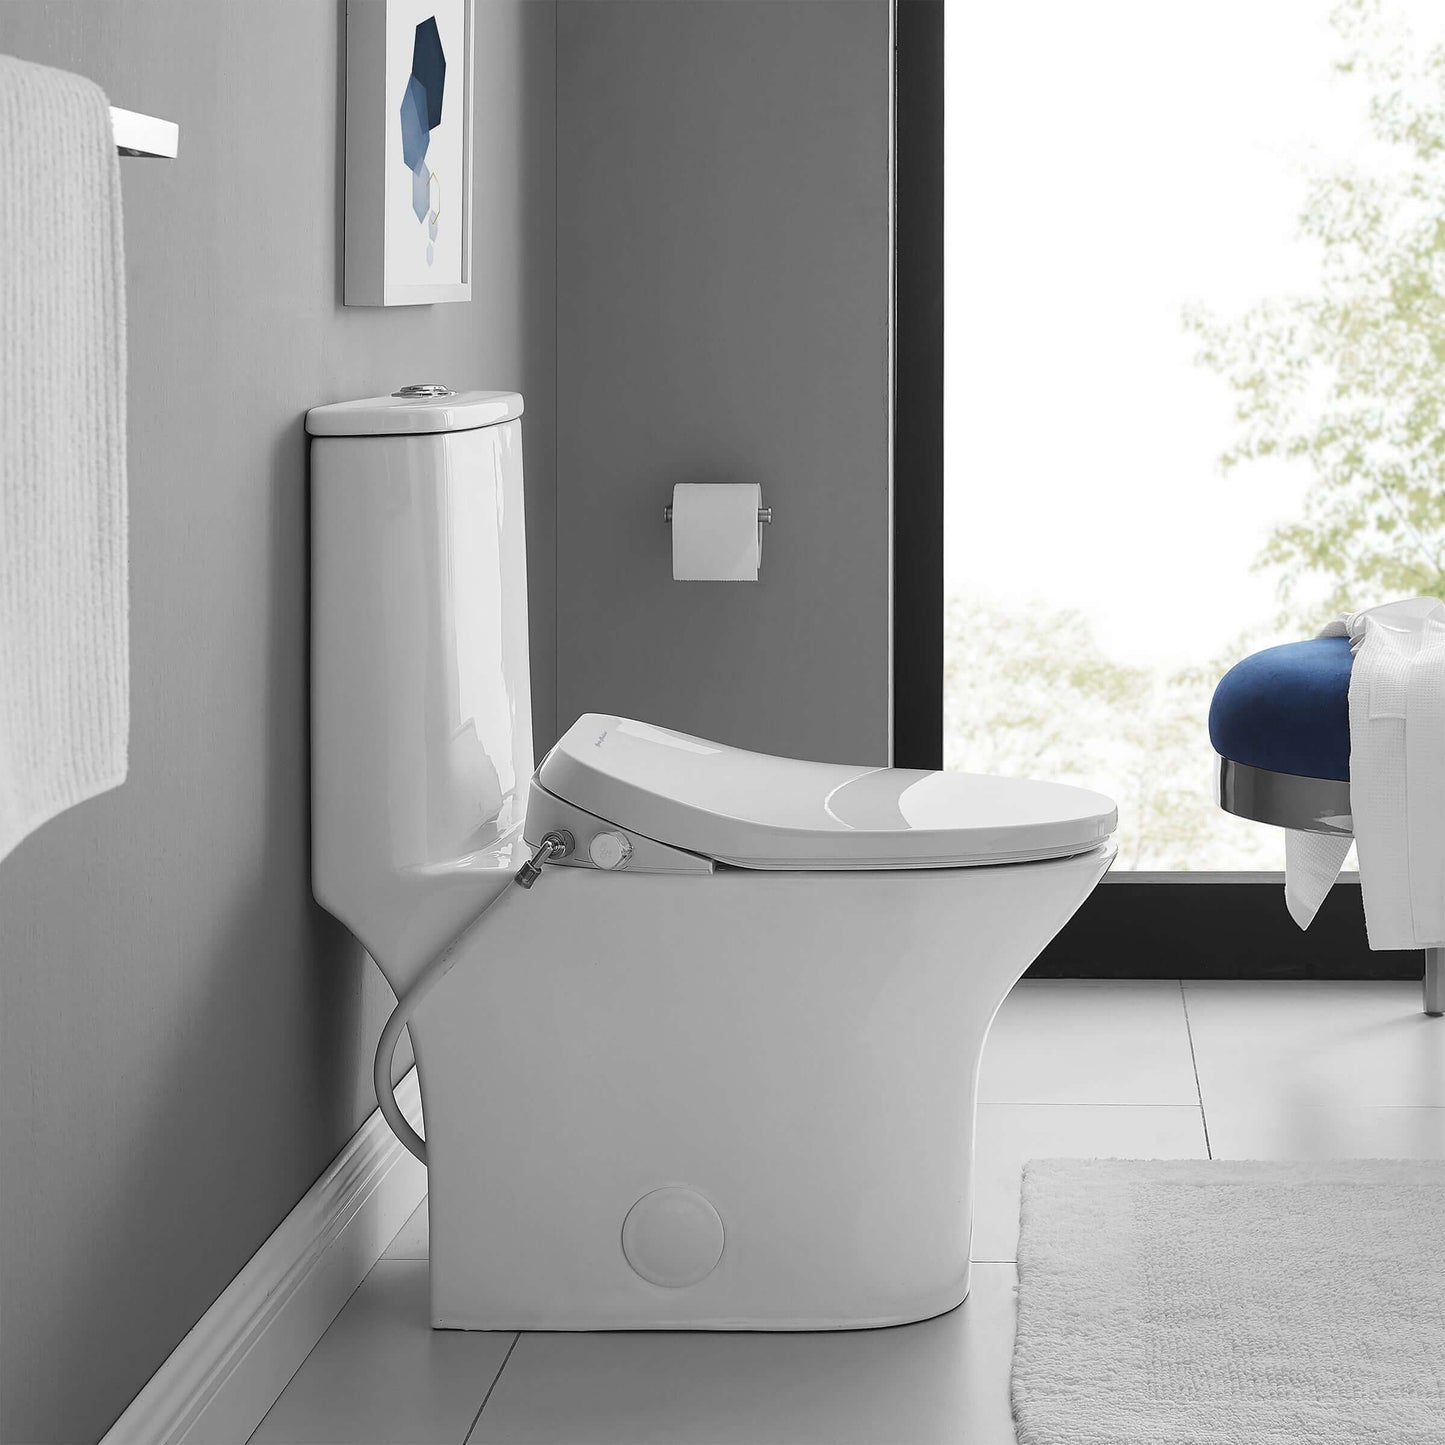 Cascade Smart Toilet Seat Bidet - saide view in a bathroom